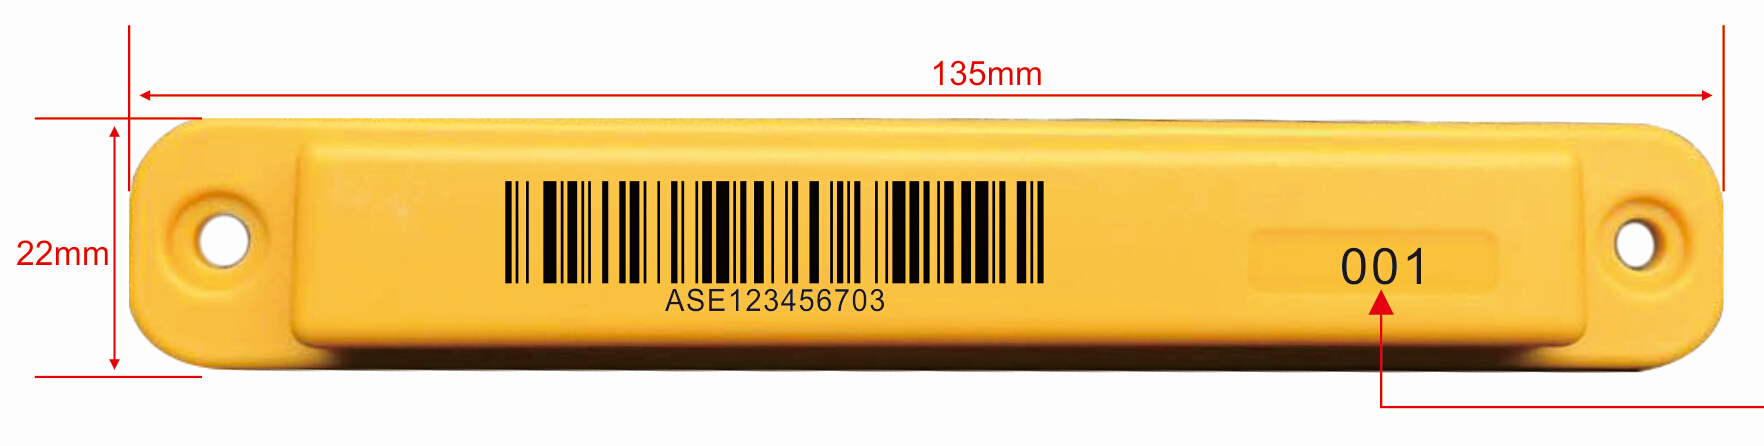 RFID Anti-metal tag size